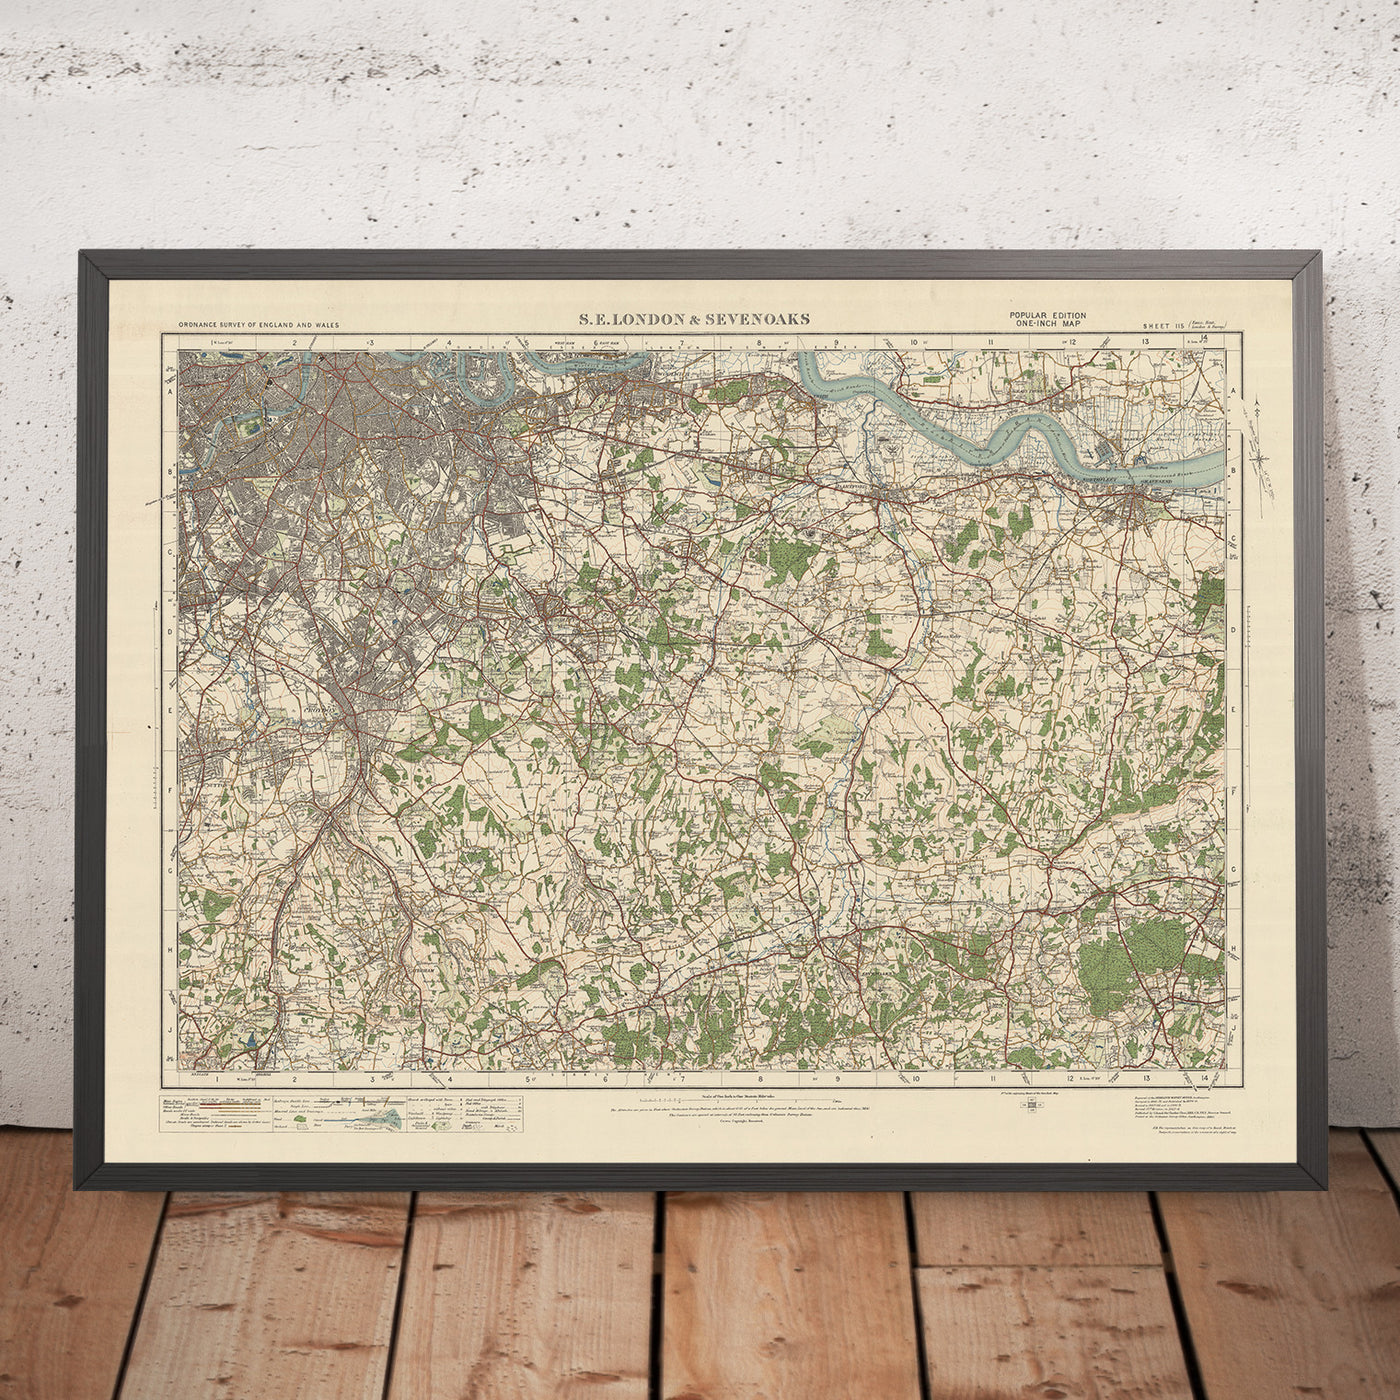 Carte Old Ordnance Survey, feuille 115 - SE London & Sevenoaks, 1925 : Croydon, Bromley, Dartford, Gravesend, Caterham